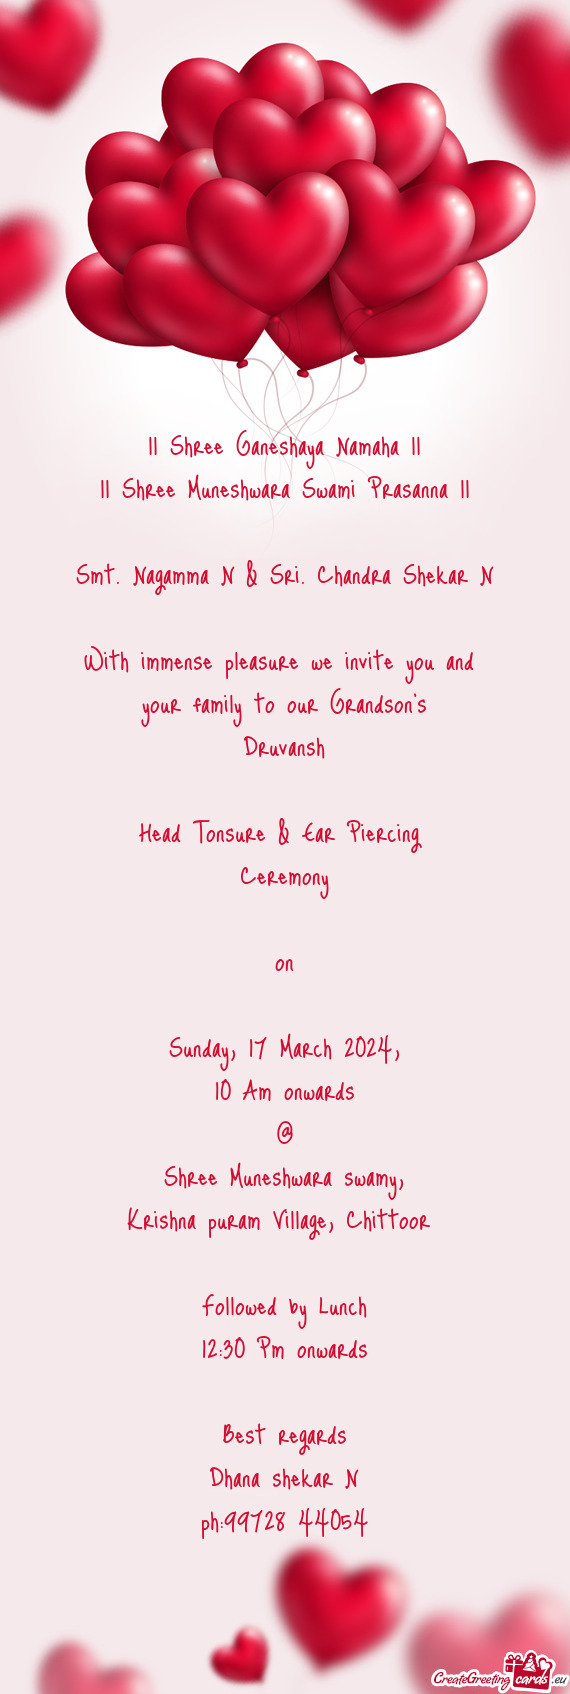 Smt. Nagamma N & Sri. Chandra Shekar N